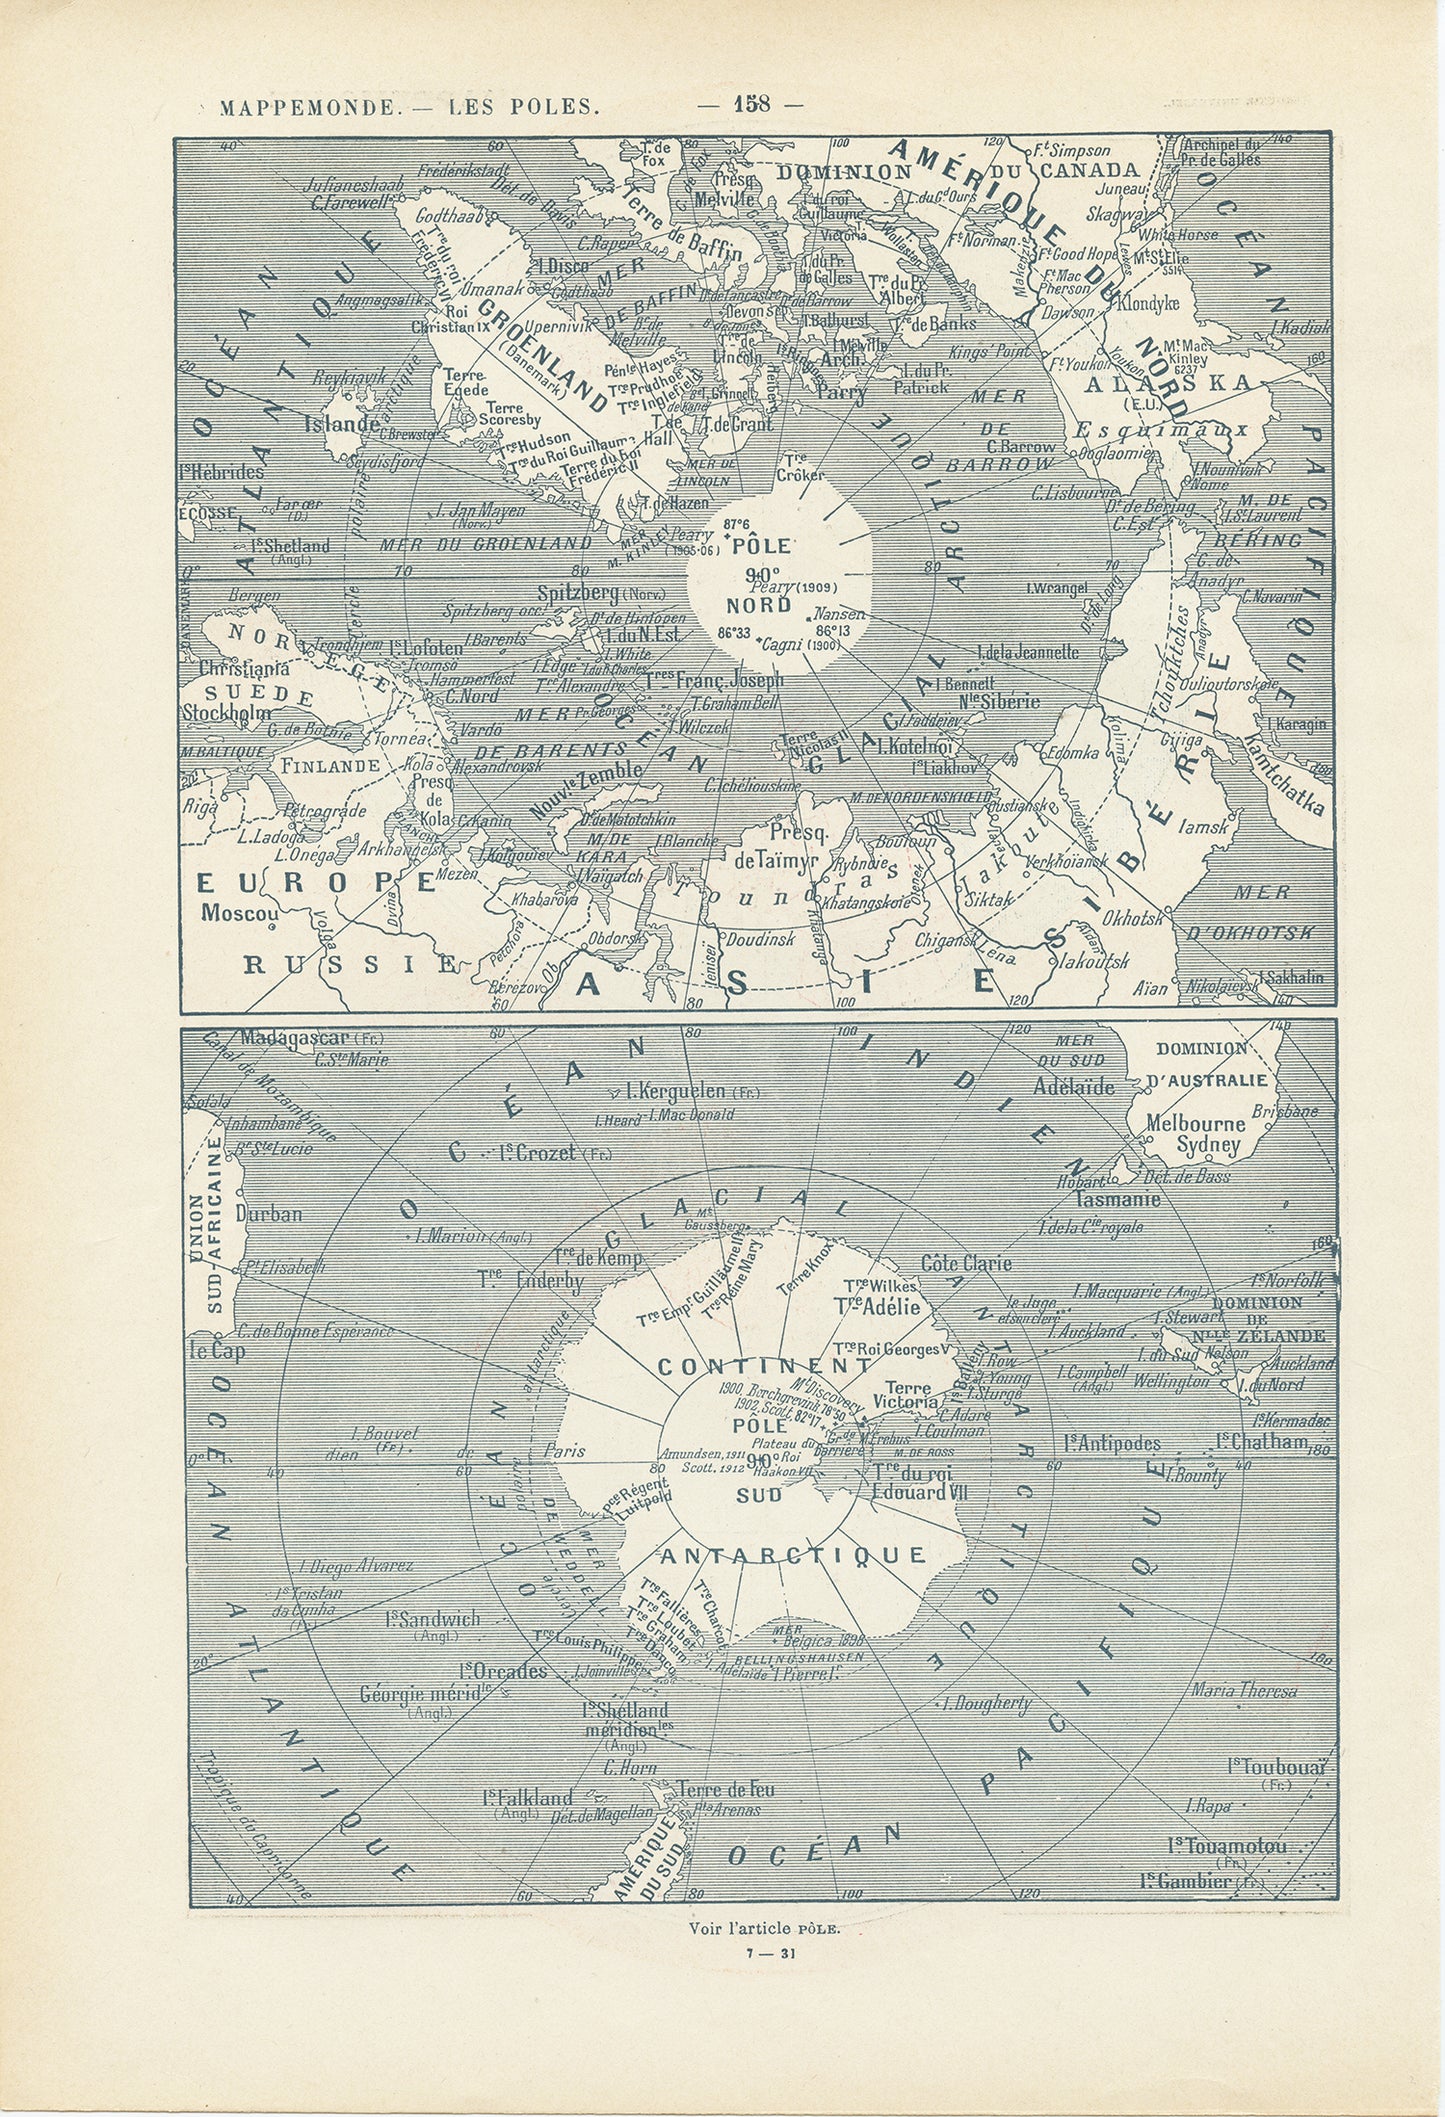 1922 Antique World Map